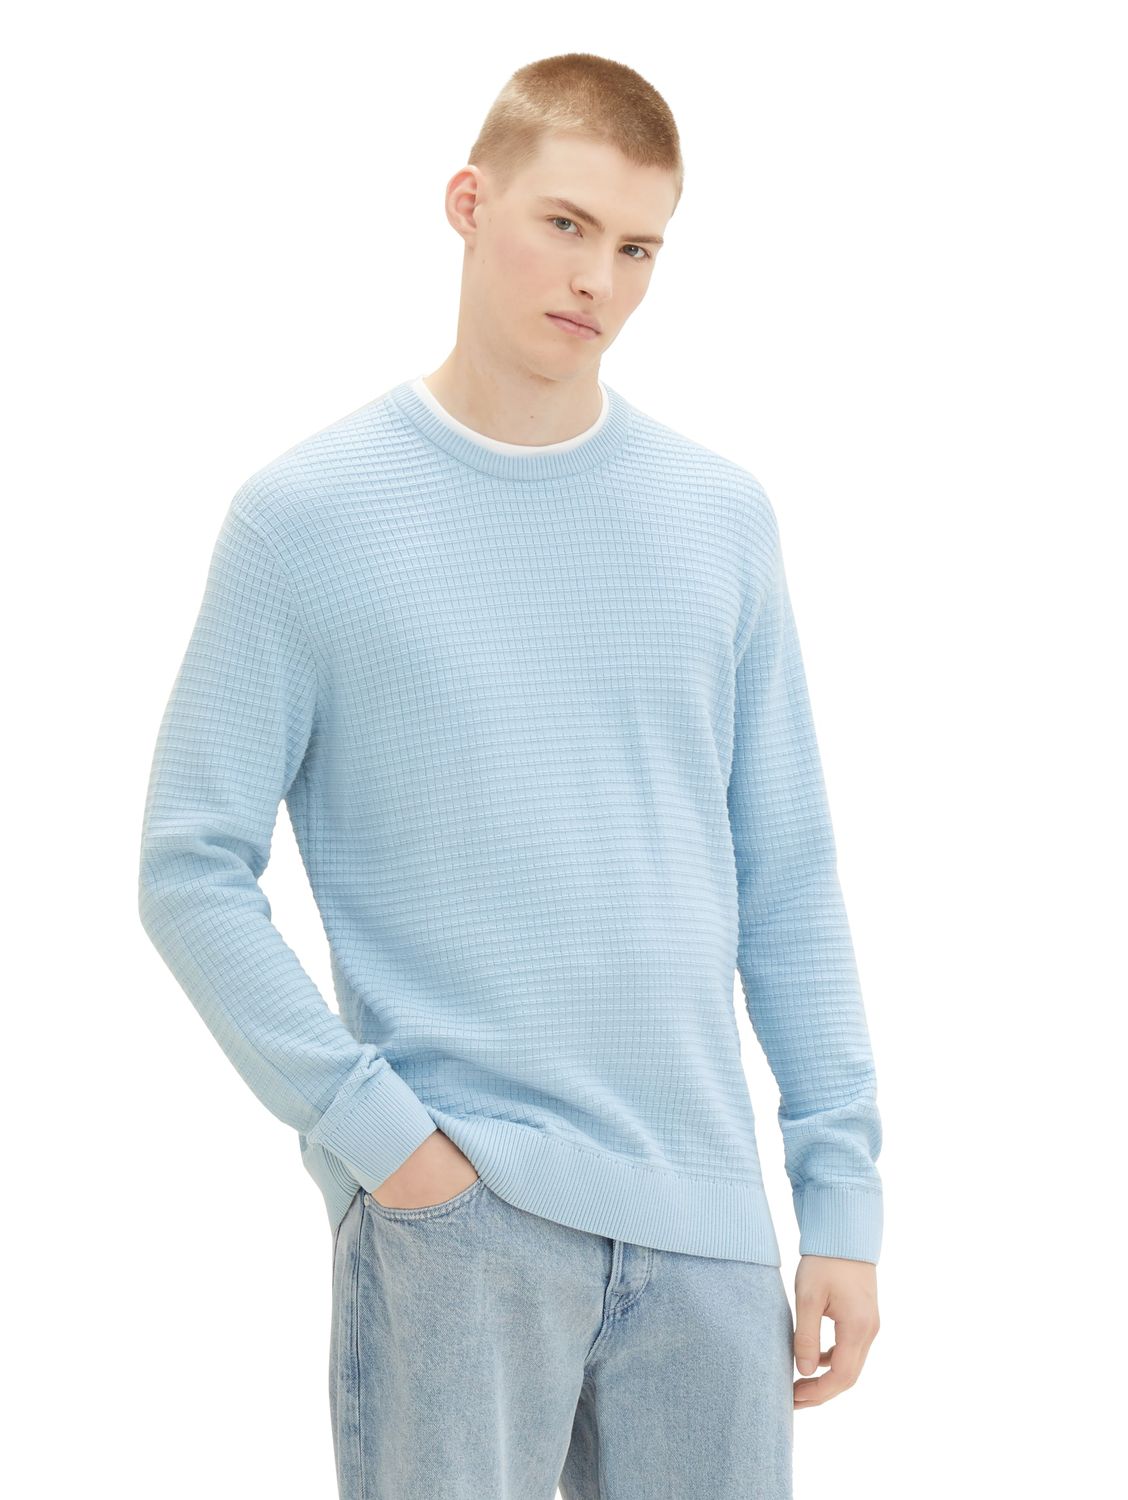 Пуловер TOM TAILOR Denim STRUCTURED DOUBLELAYER, синий чиносы structured chinos with belt tom tailor denim темно синий